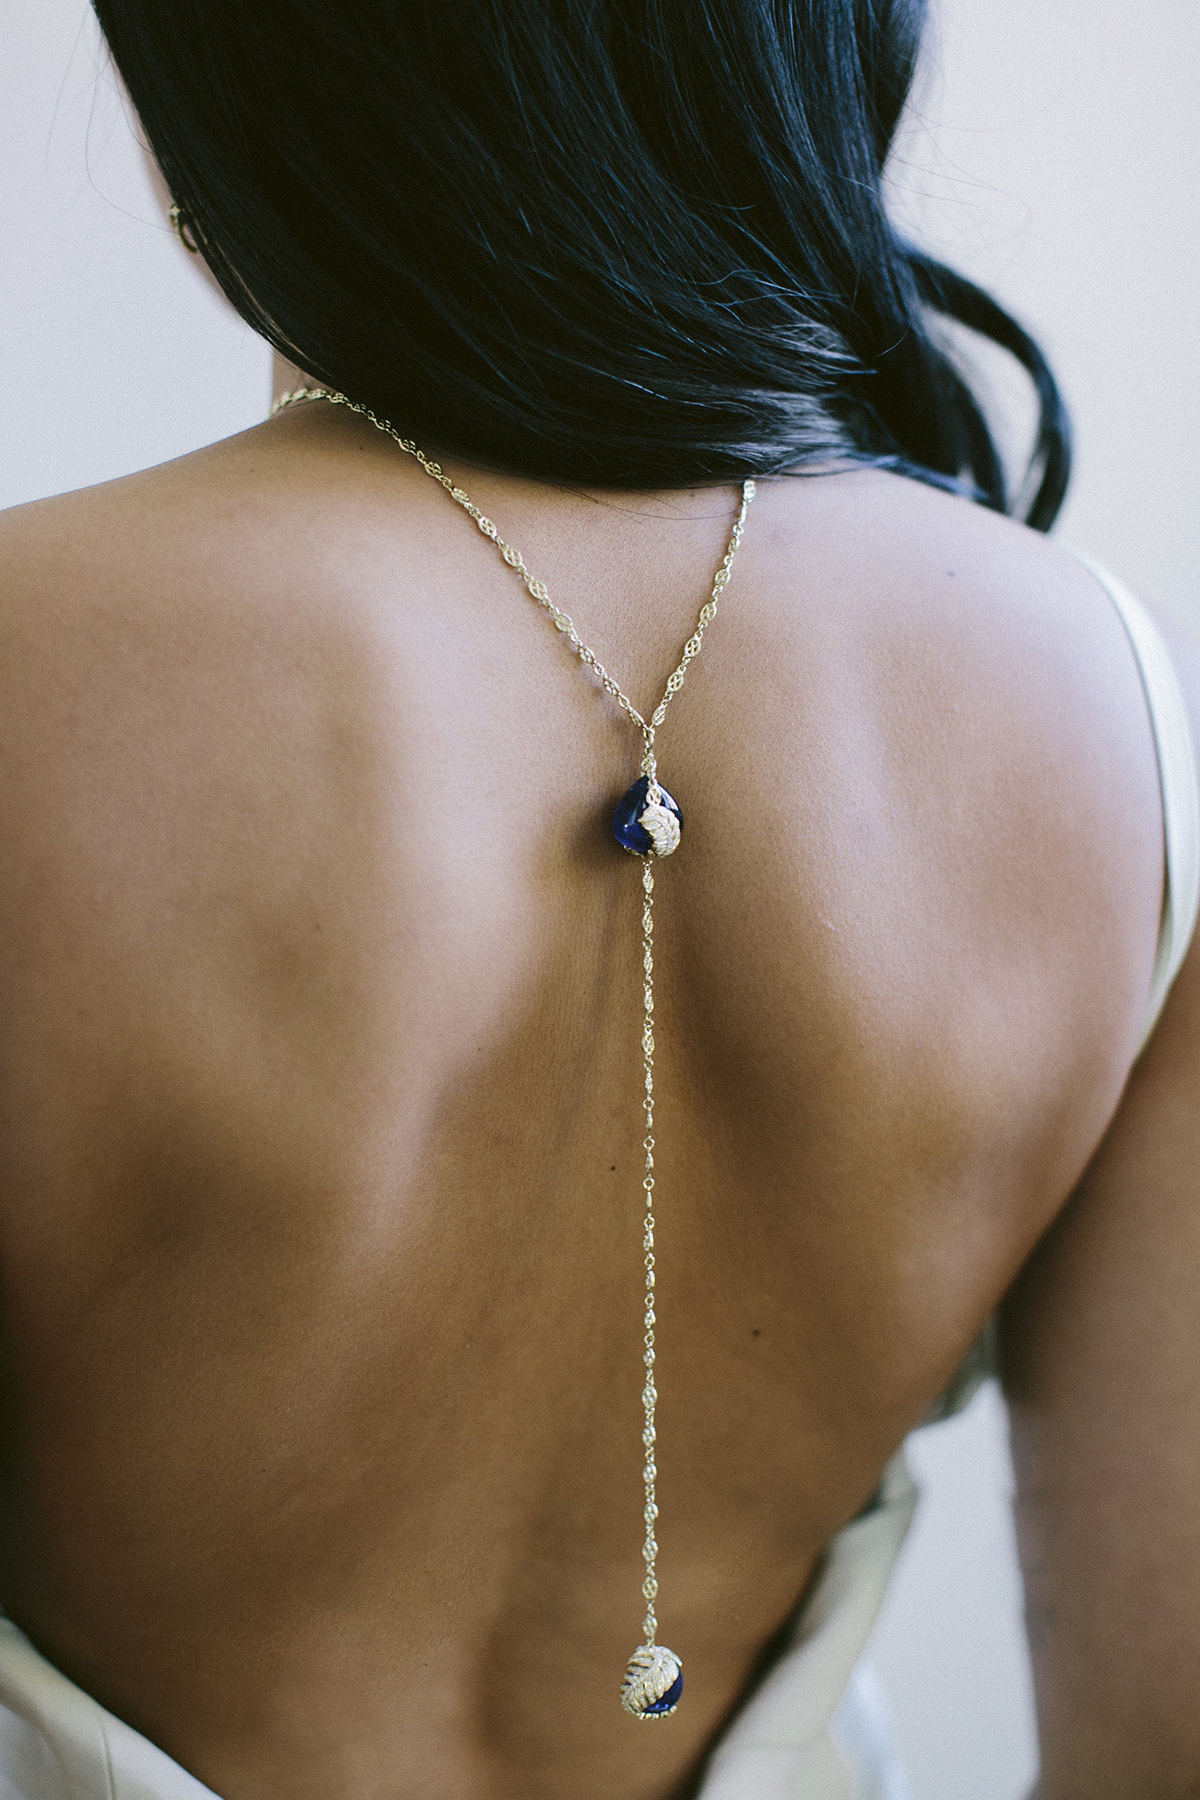 Long necklace worn on model's back